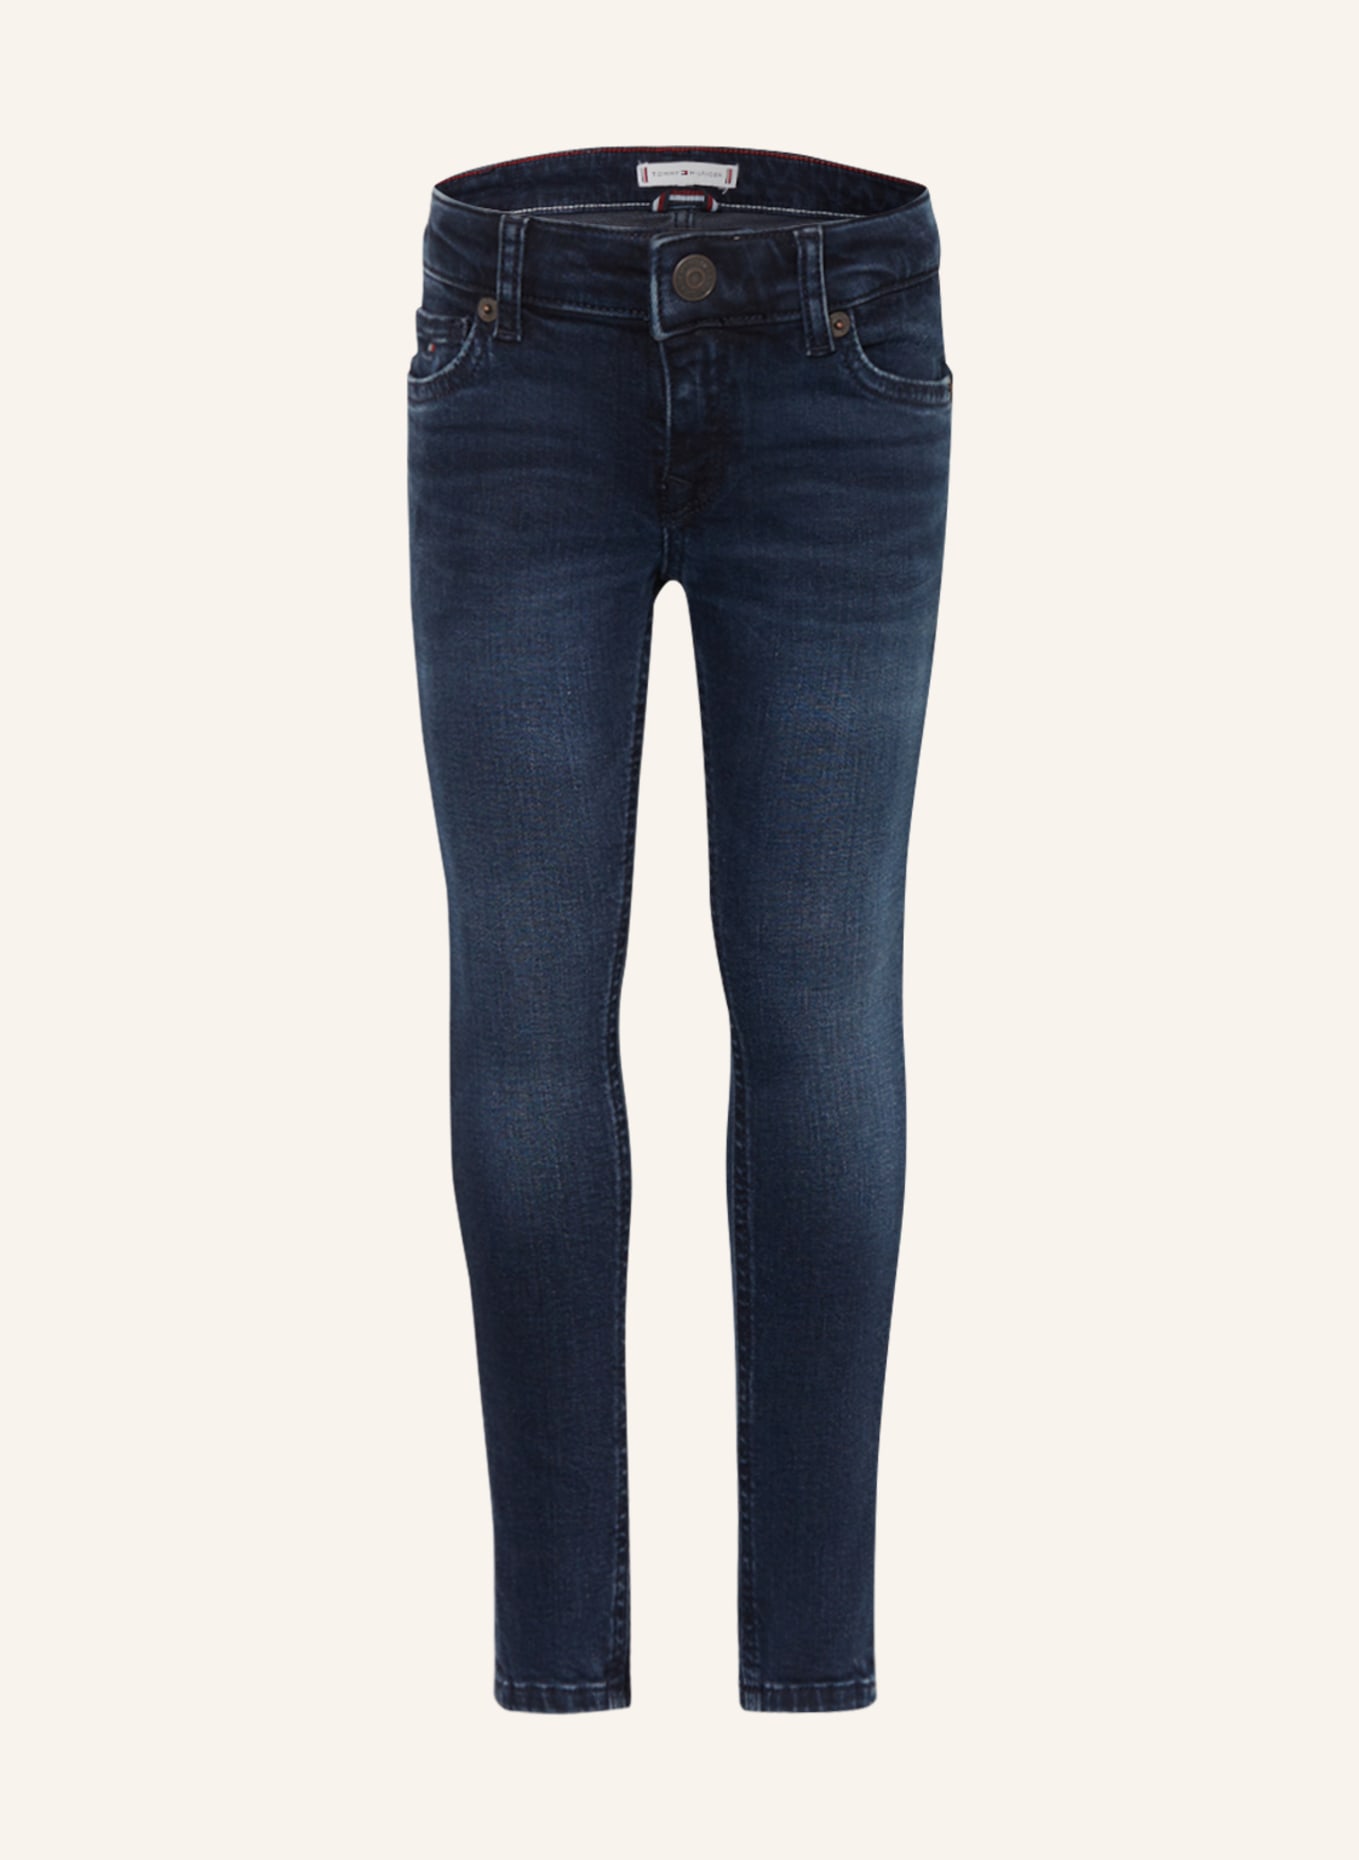 TOMMY HILFIGER Jeans NORA Skinny Fit, Farbe: 1BK Blueblack (Bild 1)